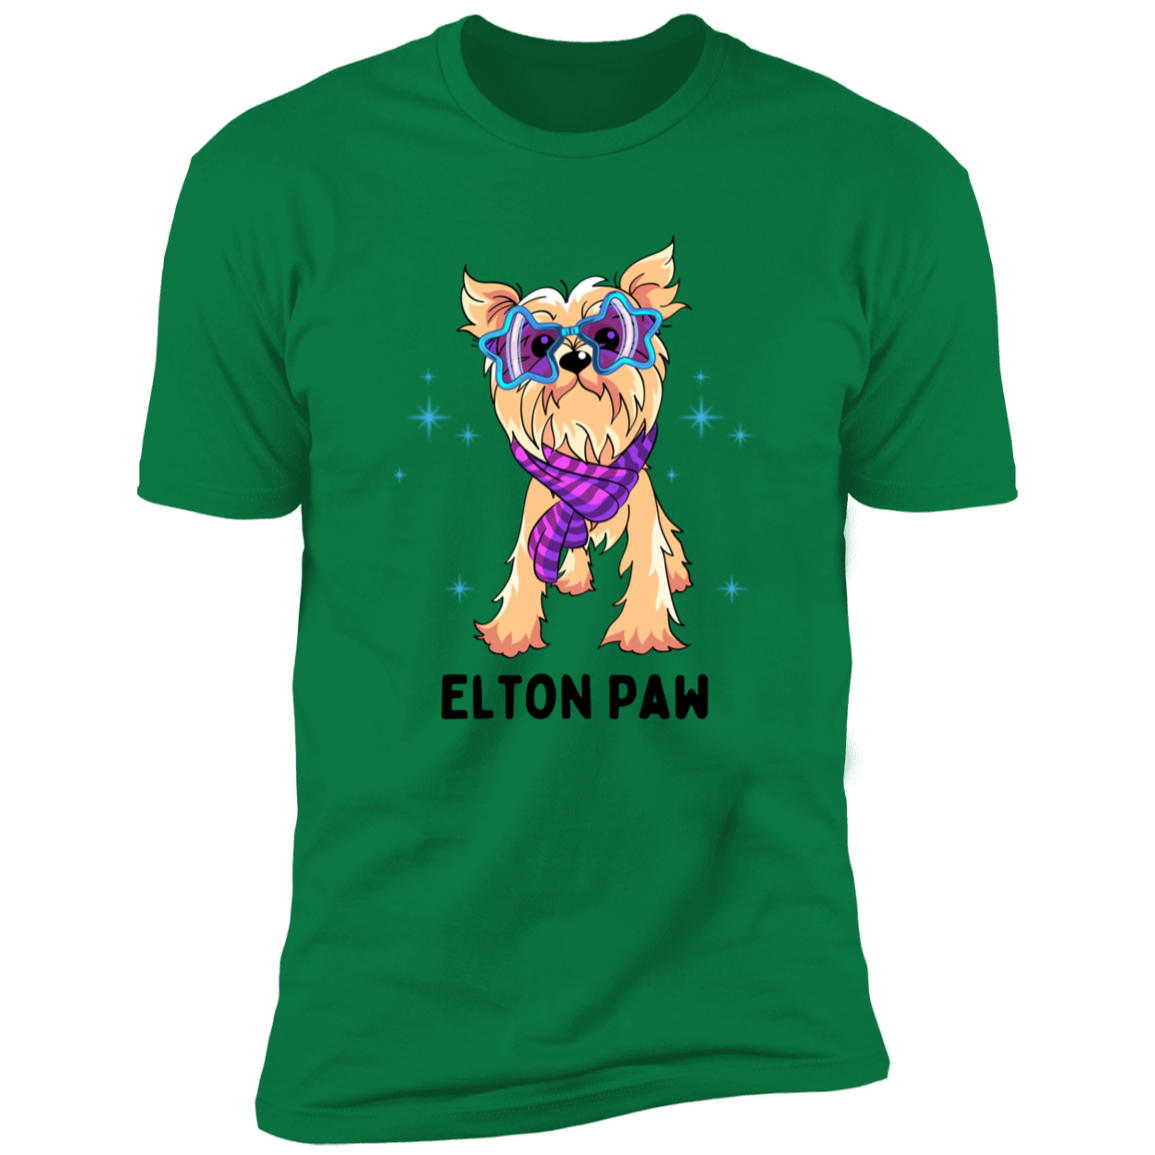 Elton Paw Dog Shirt, Funny dog shirt for humans, Dog mom shirt, dog dad shirt, in kelly green